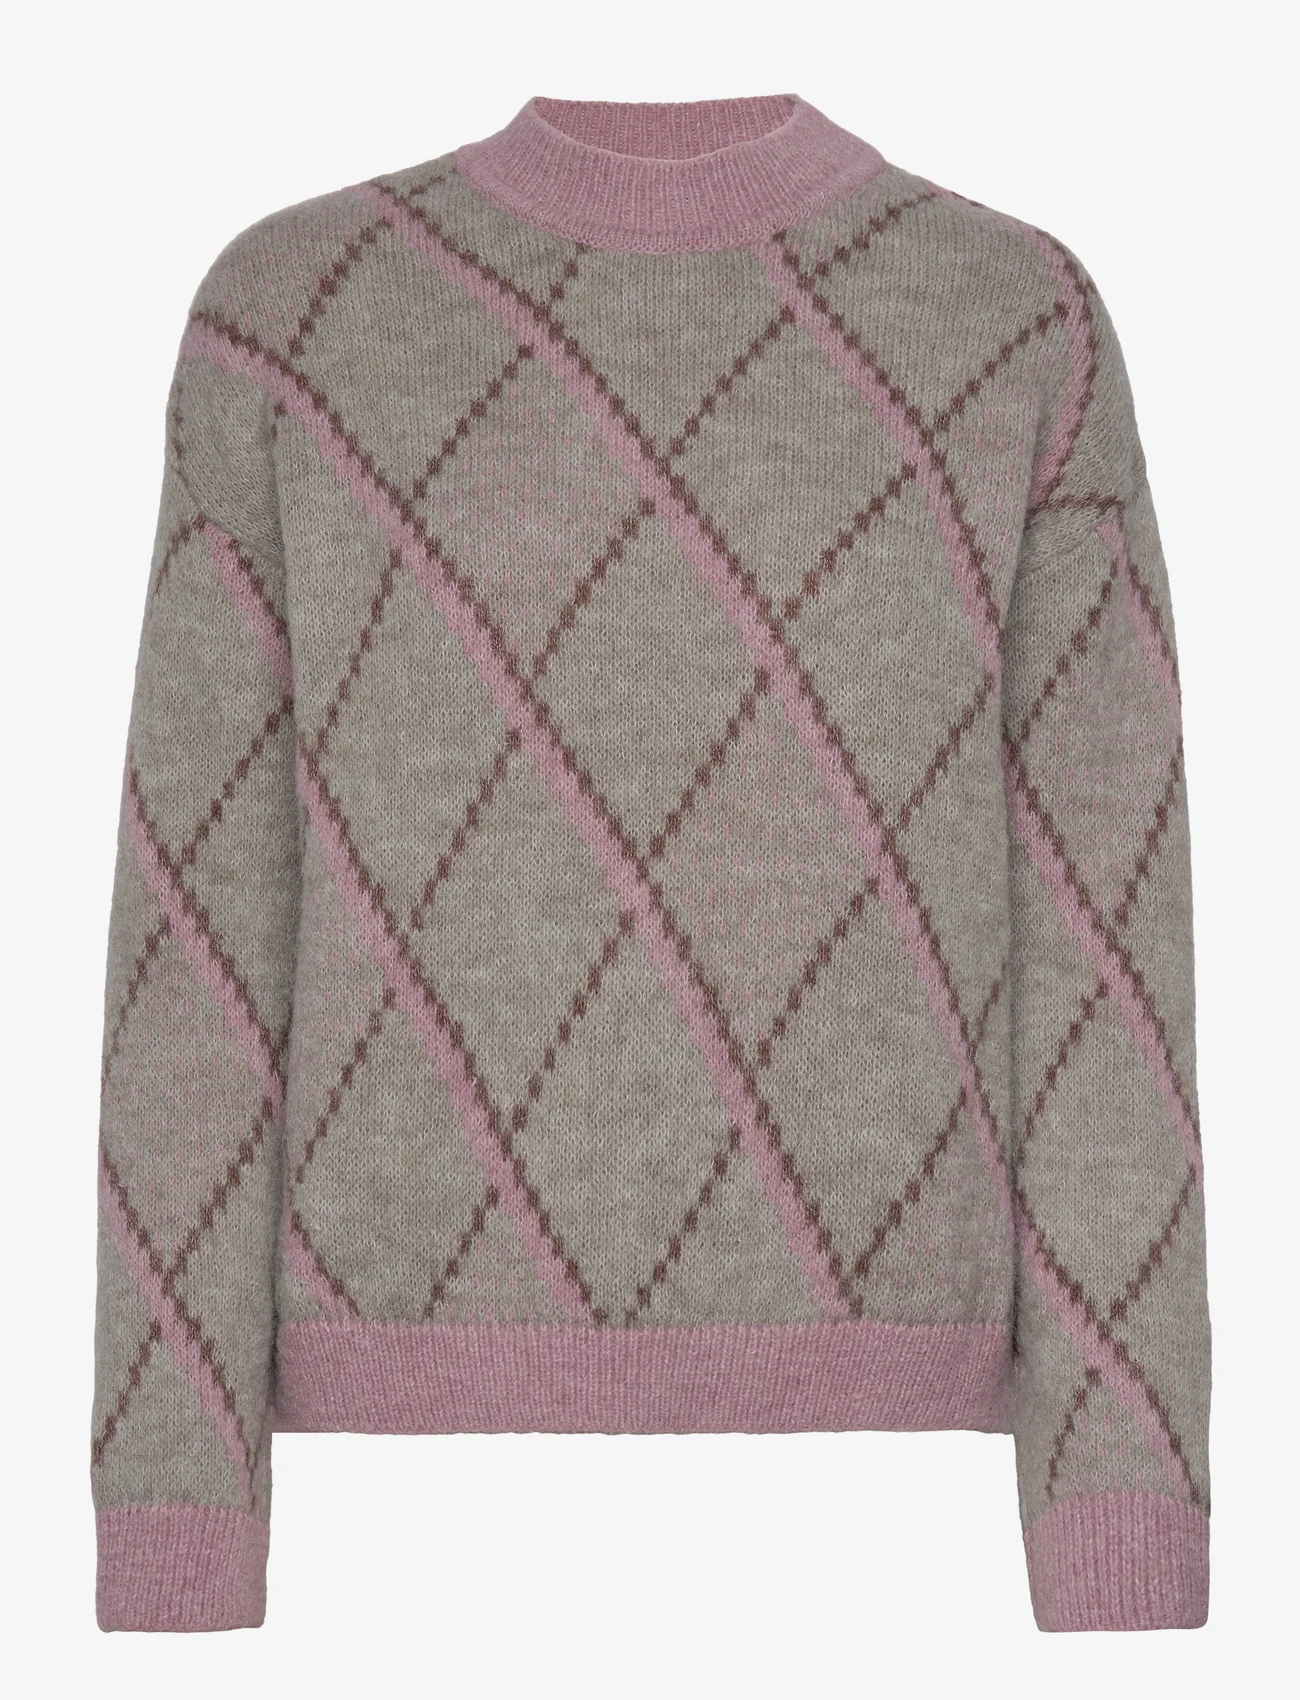 Esprit Casual - Women Sweaters long sleeve - džemprid - light taupe 4 - 0